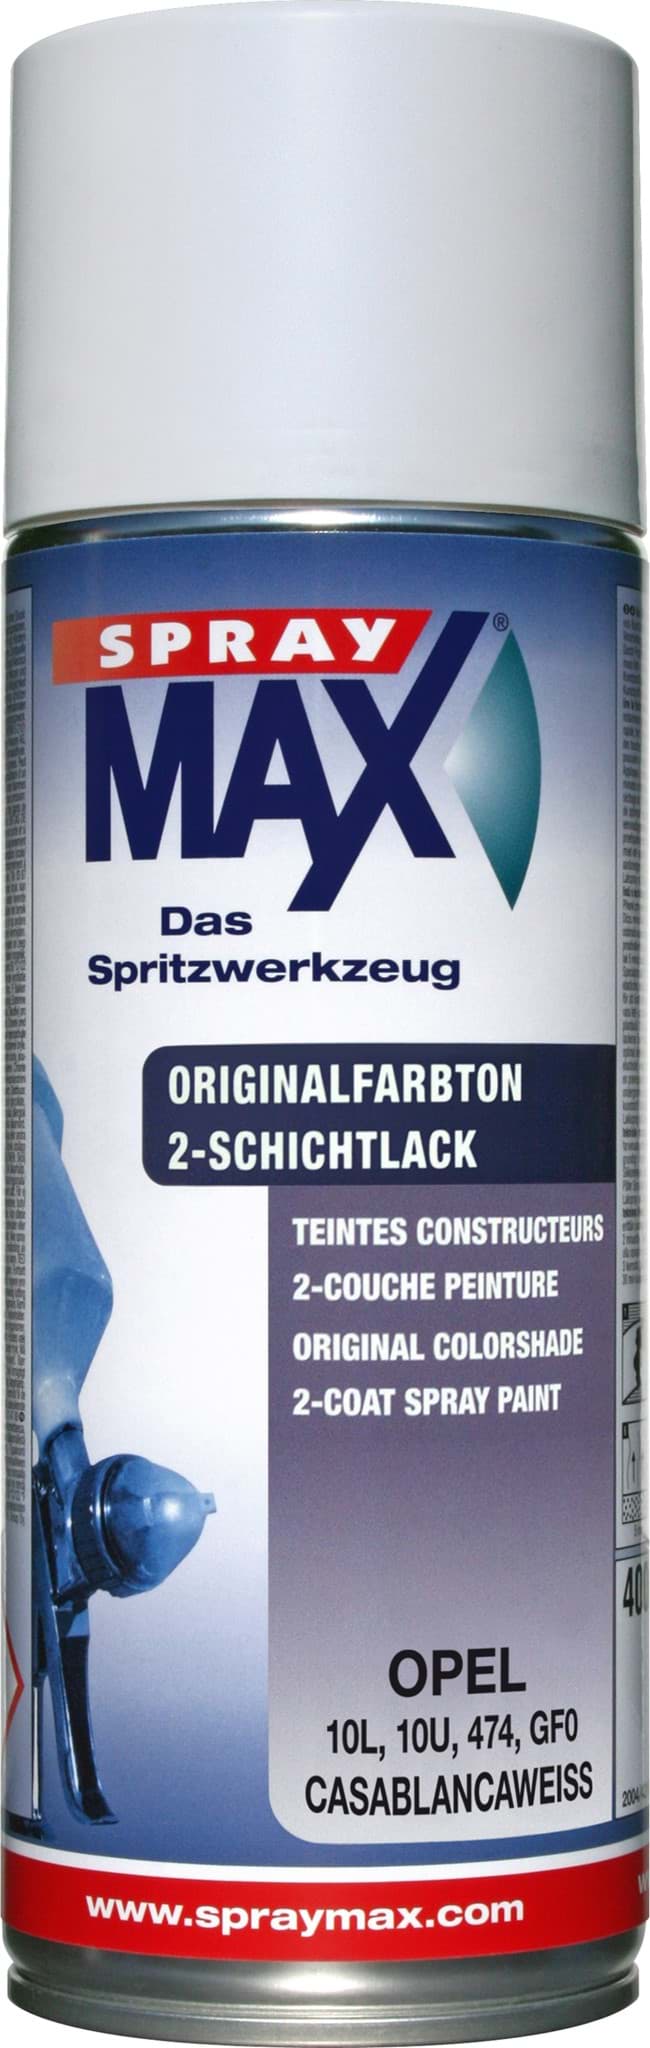 Изображение SprayMax Originalfarbton für Opel 474 casablancaweiss